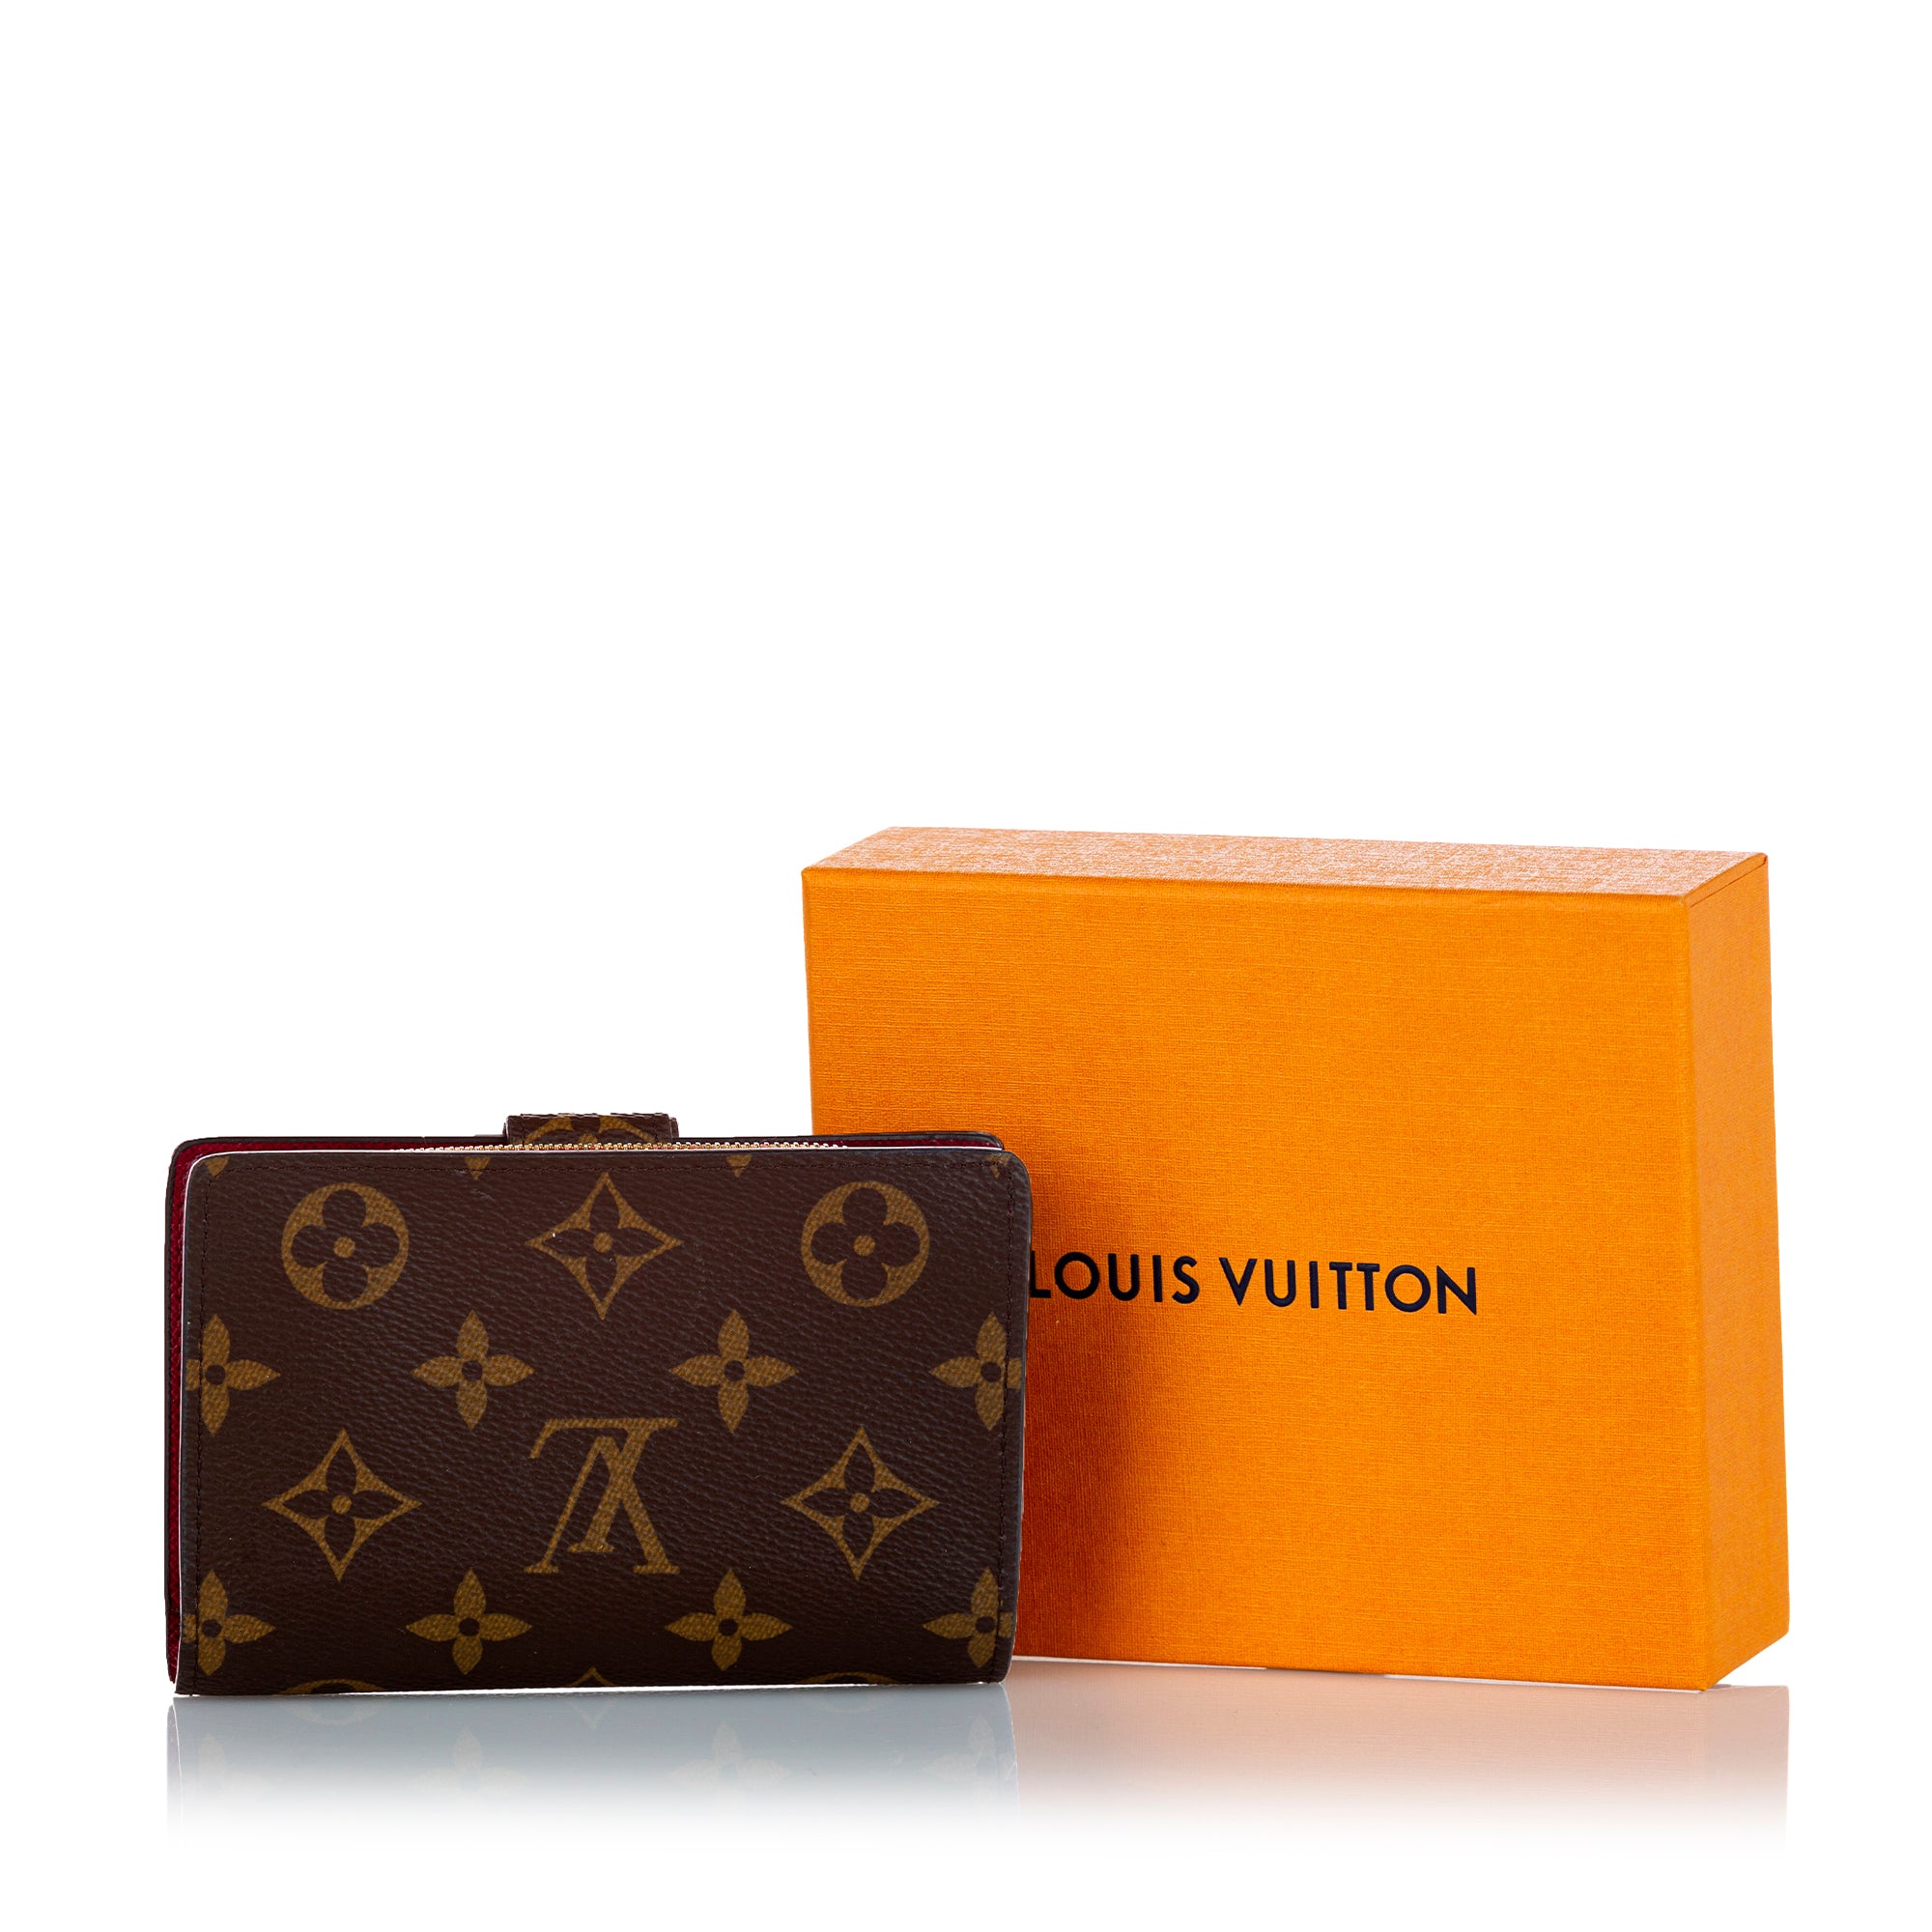 Authenticated Used LOUIS VUITTON Louis Vuitton Portefeuille